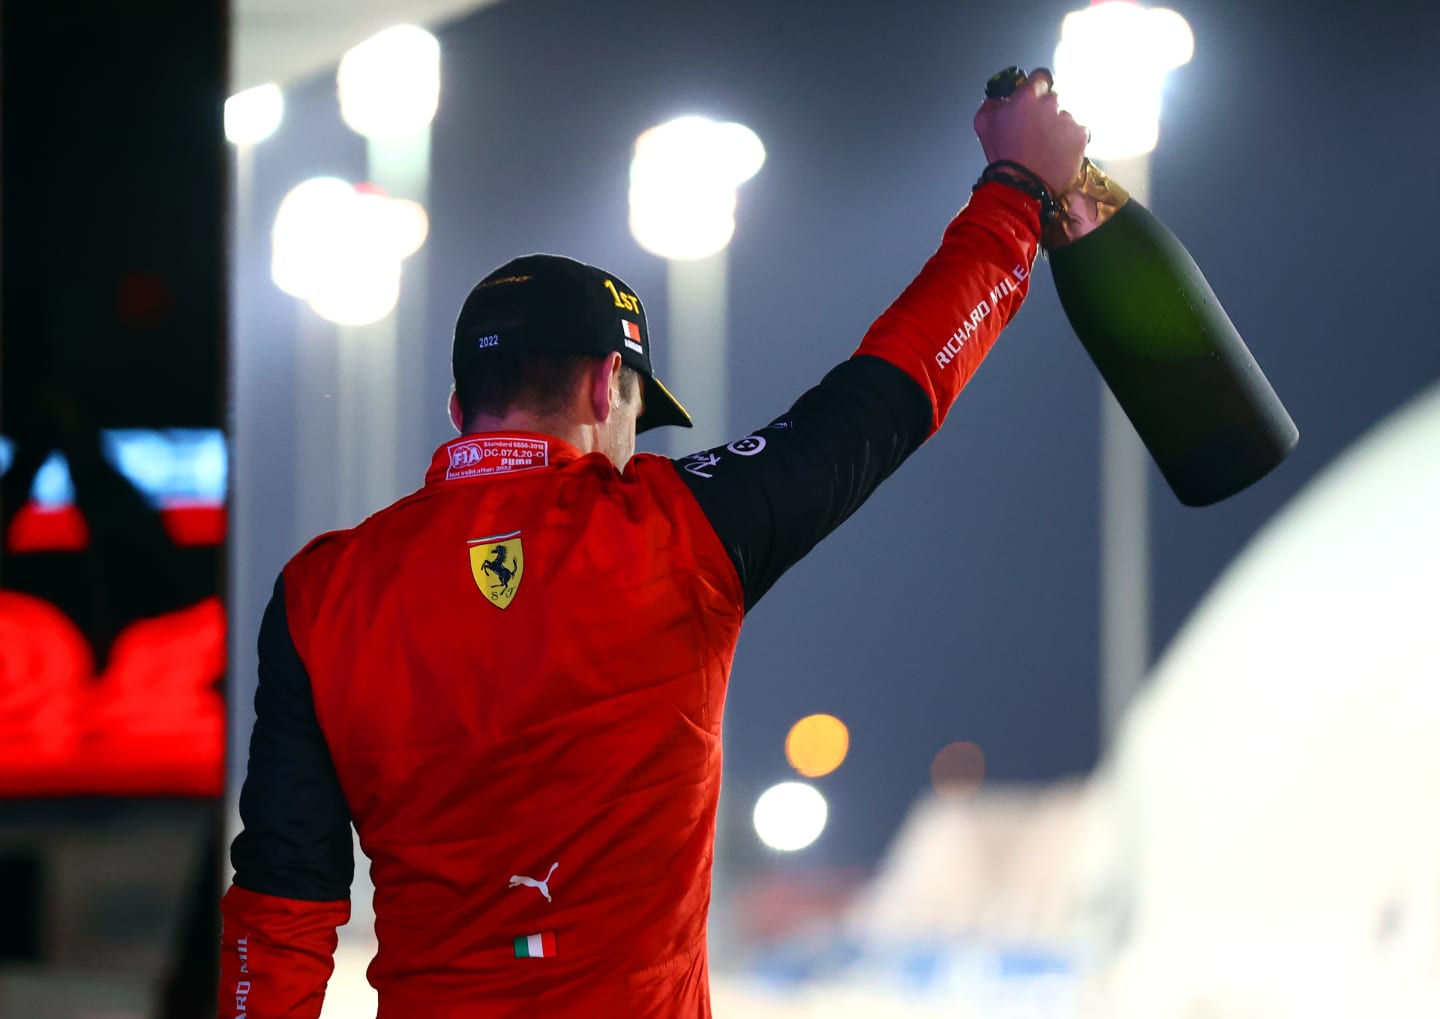 BAHRAIN, BAHRAIN - MARCH 20: Race winner Charles Leclerc of Monaco and Ferrari celebrates on the podium during the F1 Grand Prix of Bahrain at Bahrain International Circuit on March 20, 2022 in Bahrain, Bahrain. (Photo by Dan Istitene - Formula 1/Formula 1 via Getty Images)